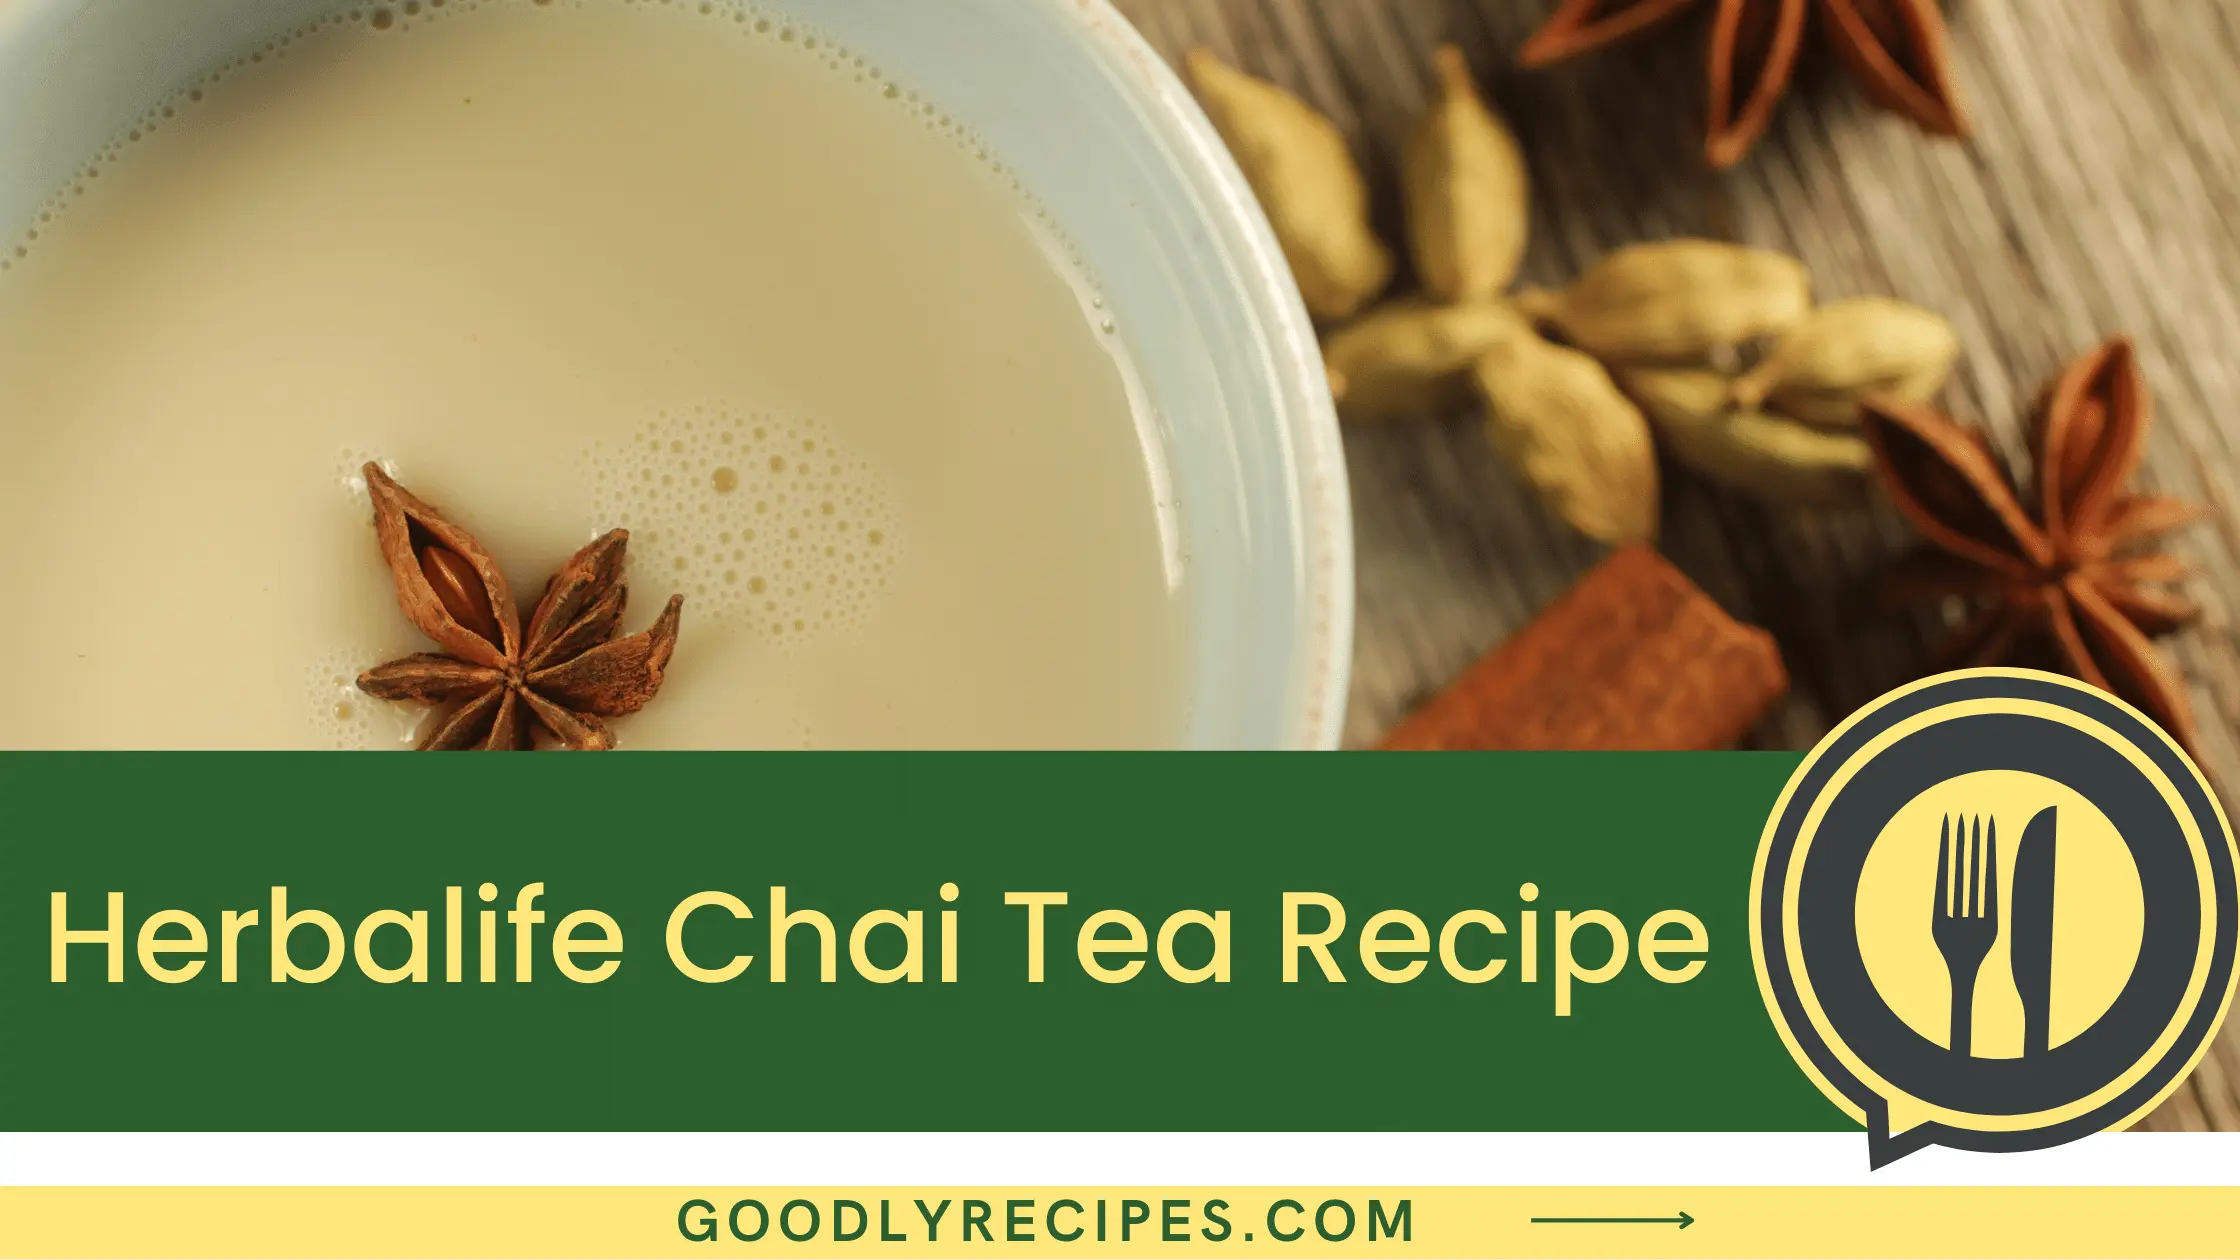 Herbalife Chai Tea Recipes